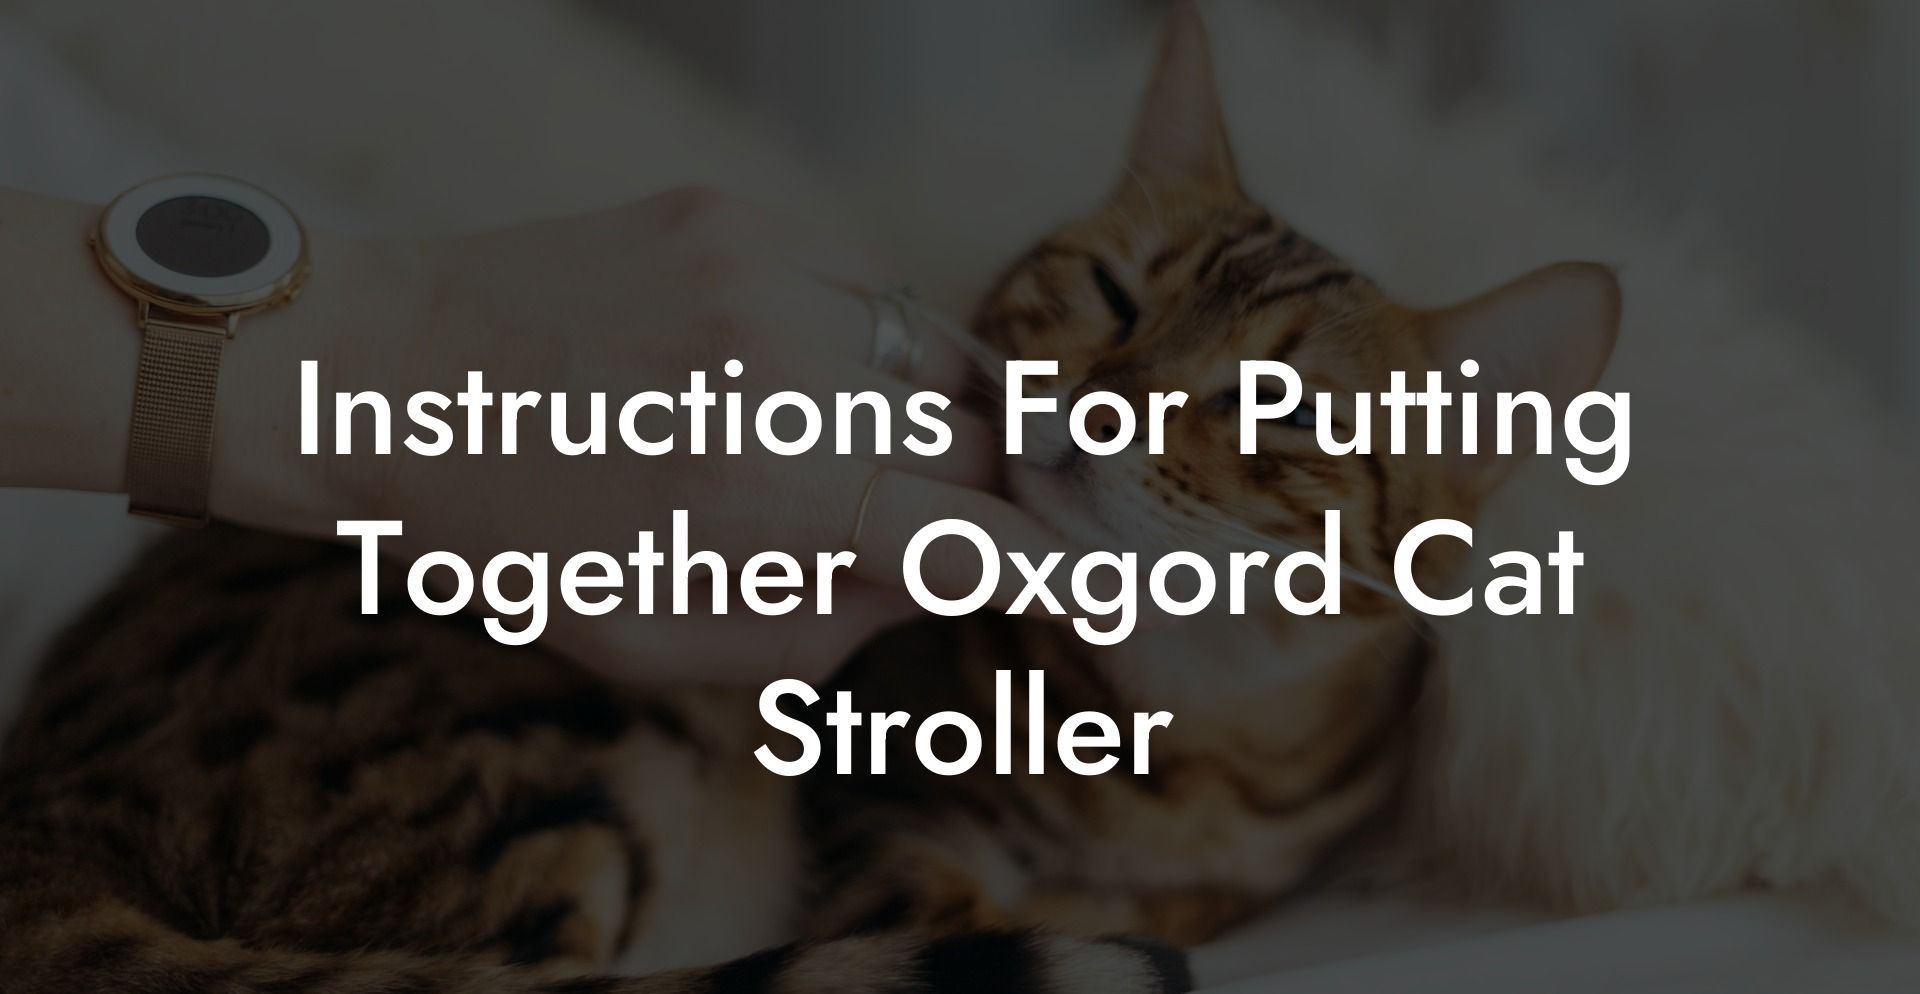 Instructions For Putting Together Oxgord Cat Stroller